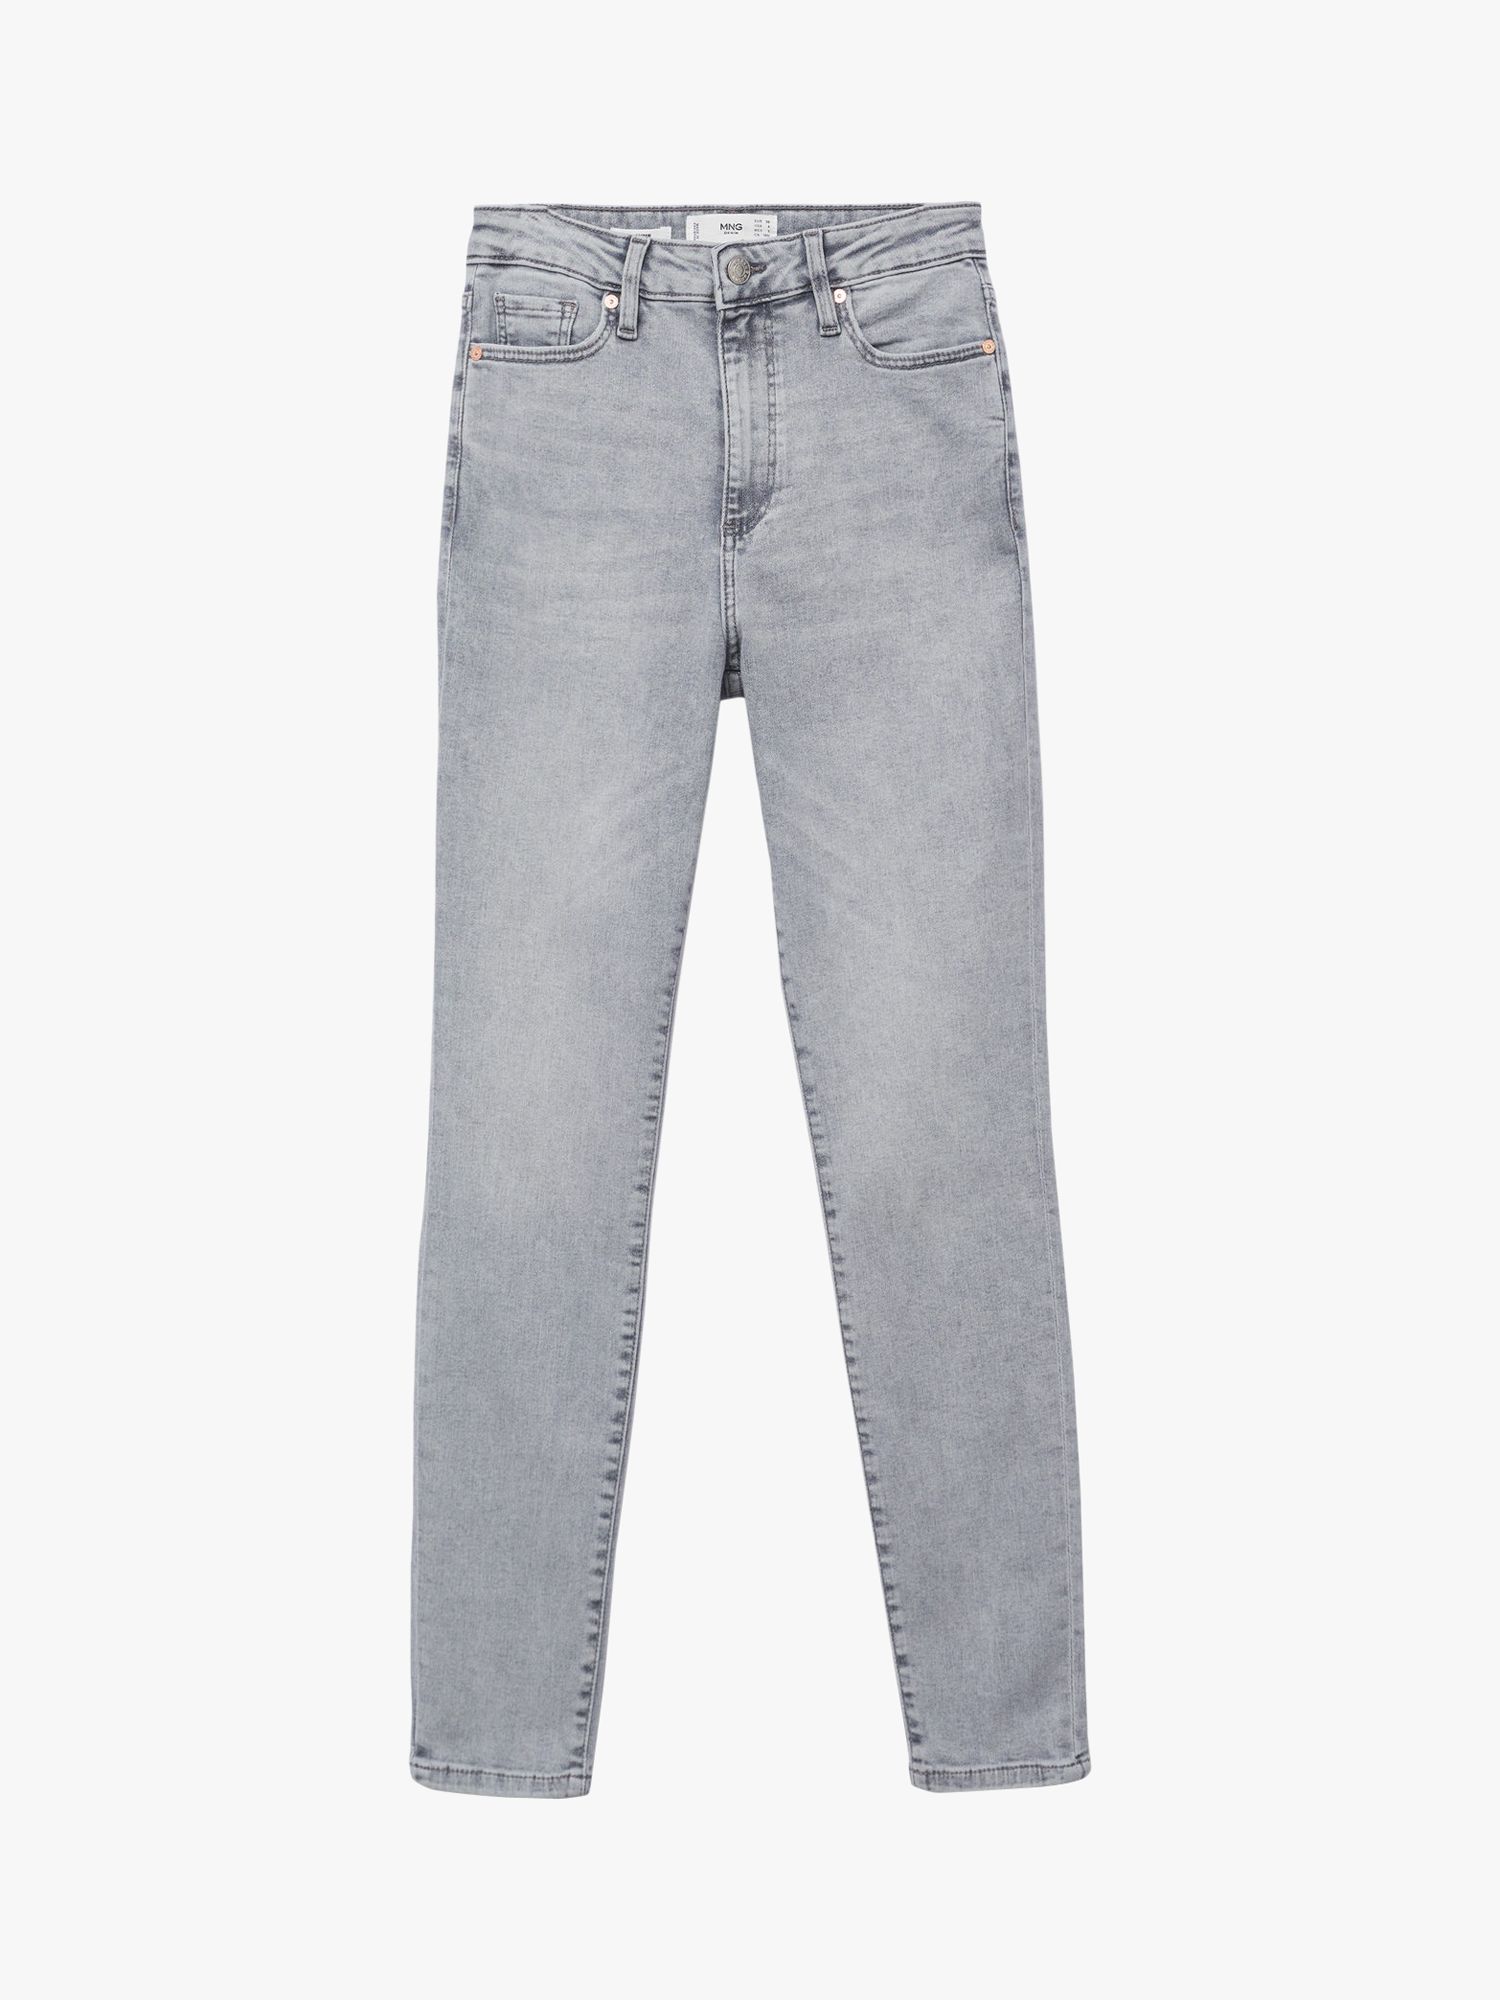 Mango Anne High Waist Skinny Jeans, Open Grey at John Lewis & Partners